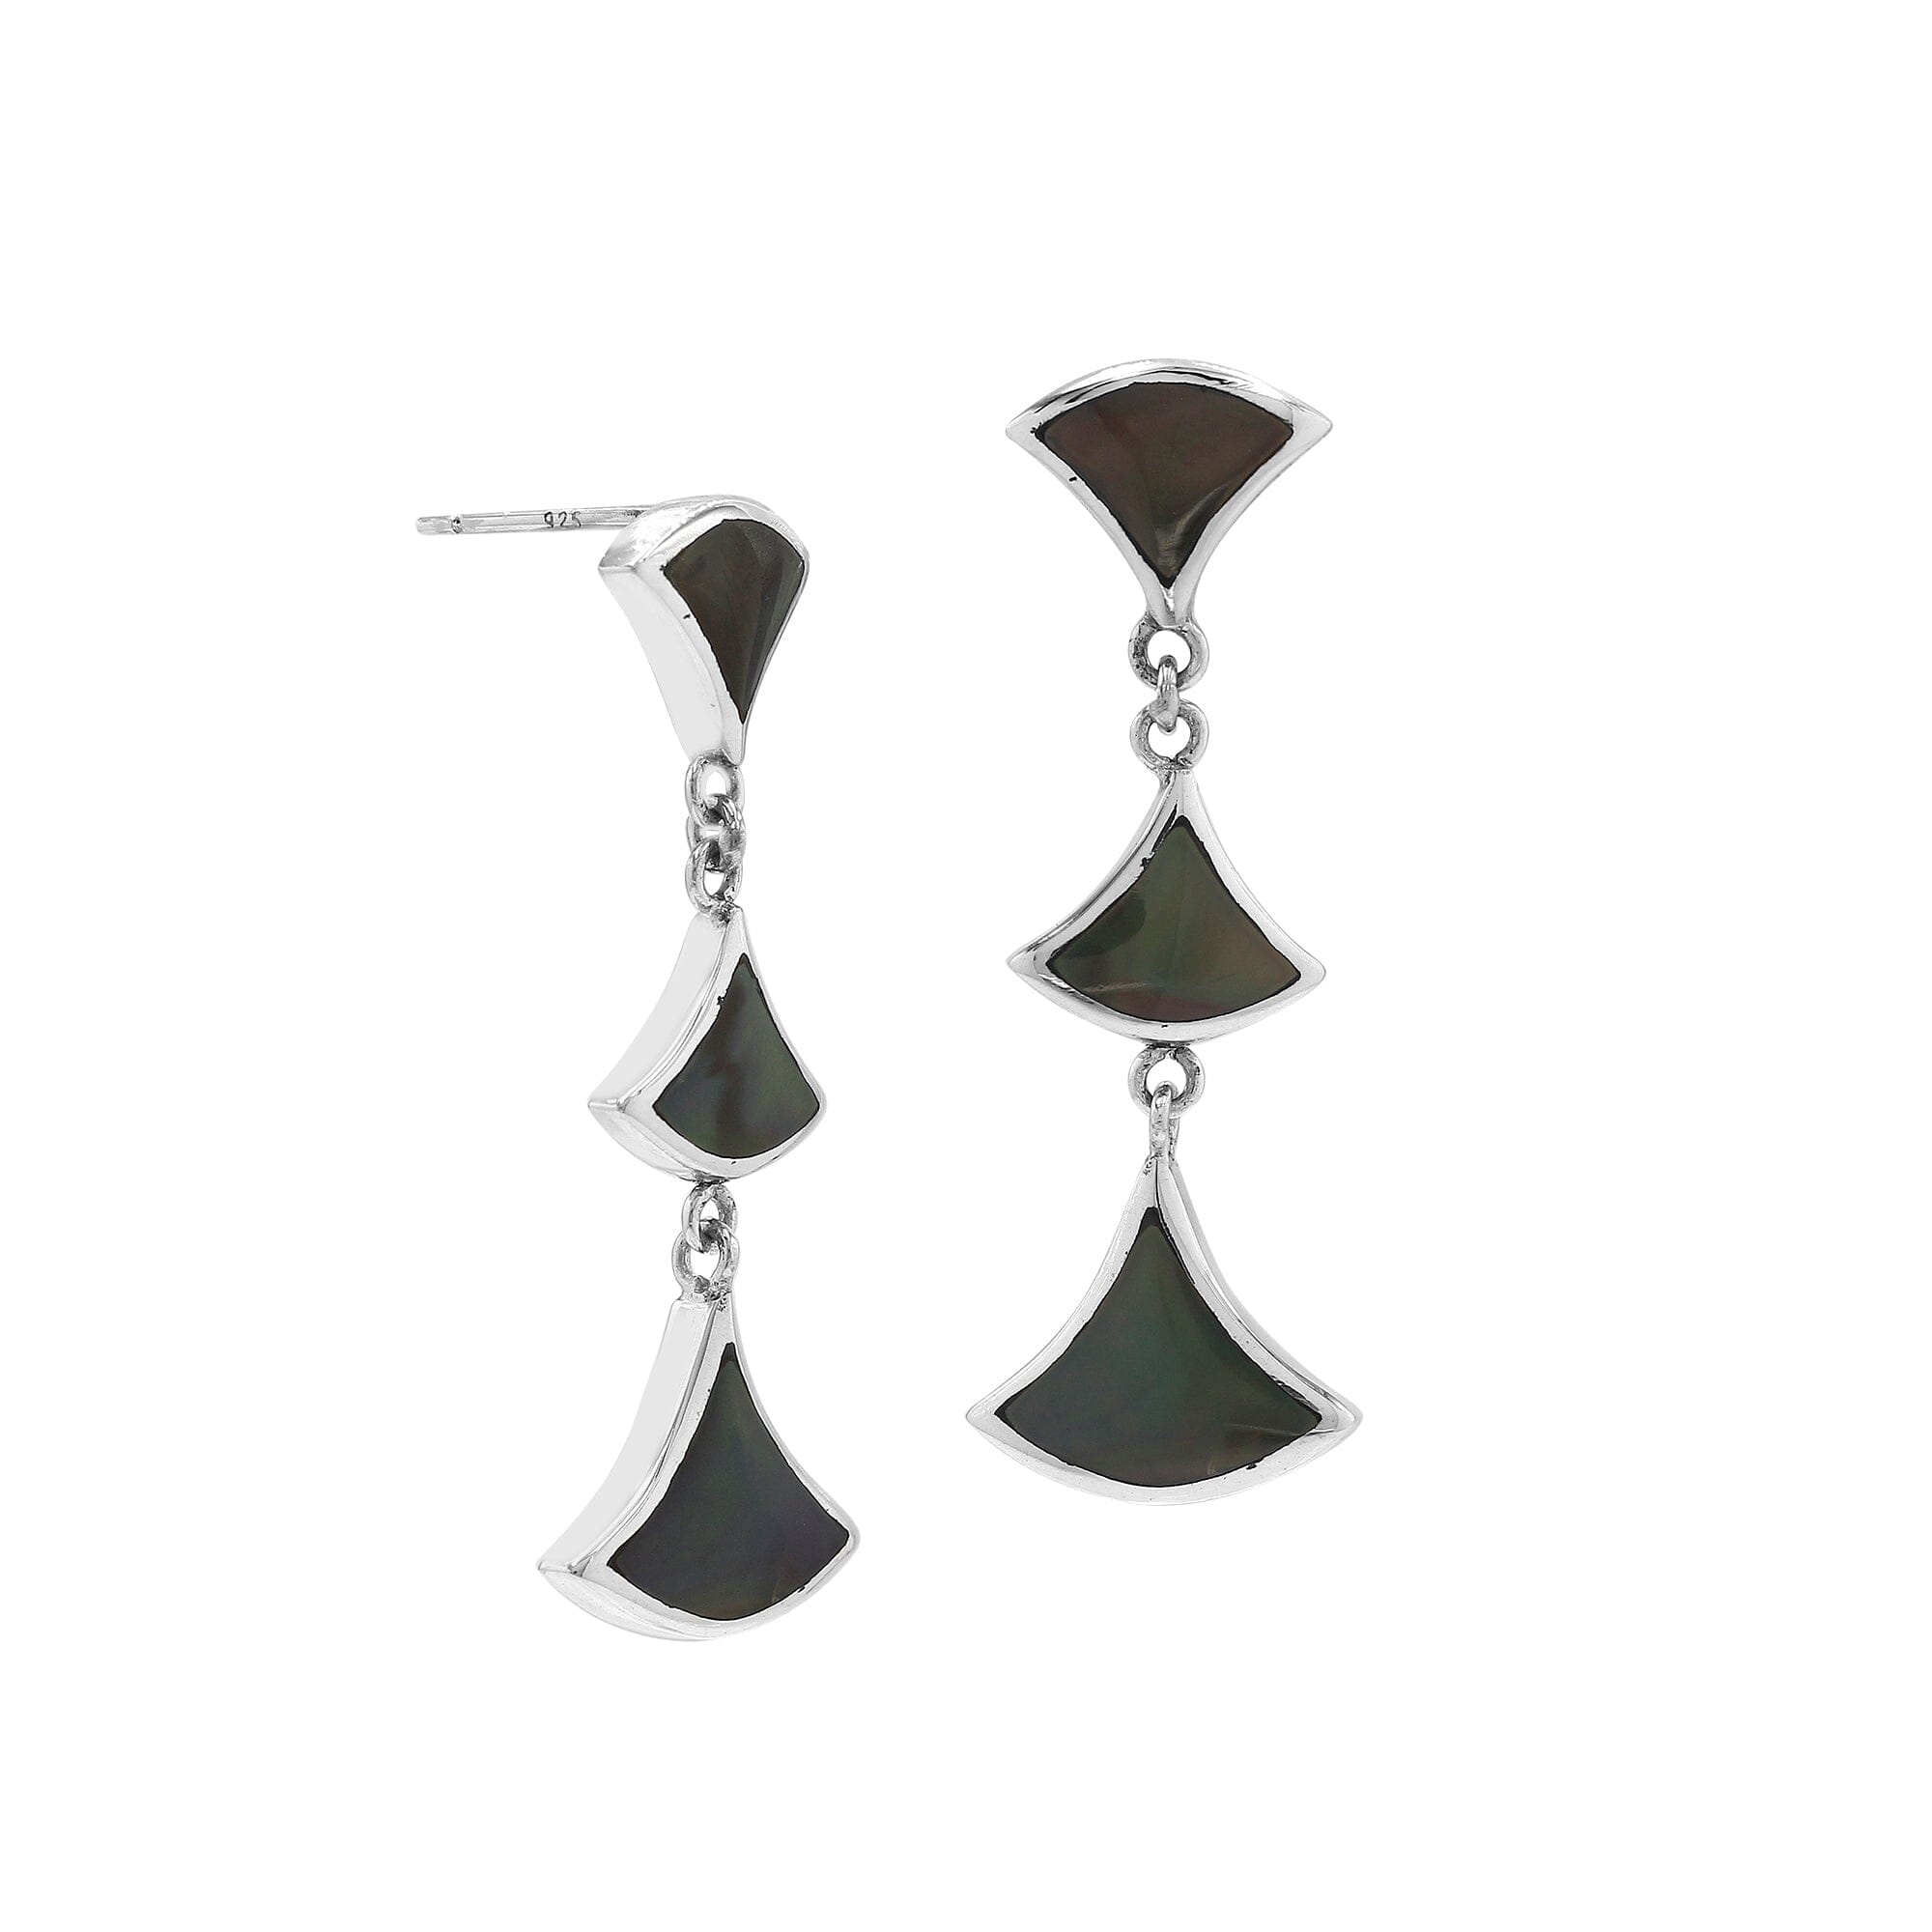 Ornate Silver 925 and Onyx Dangle Earrings from Bali - Puncak Jaya in Black  | NOVICA